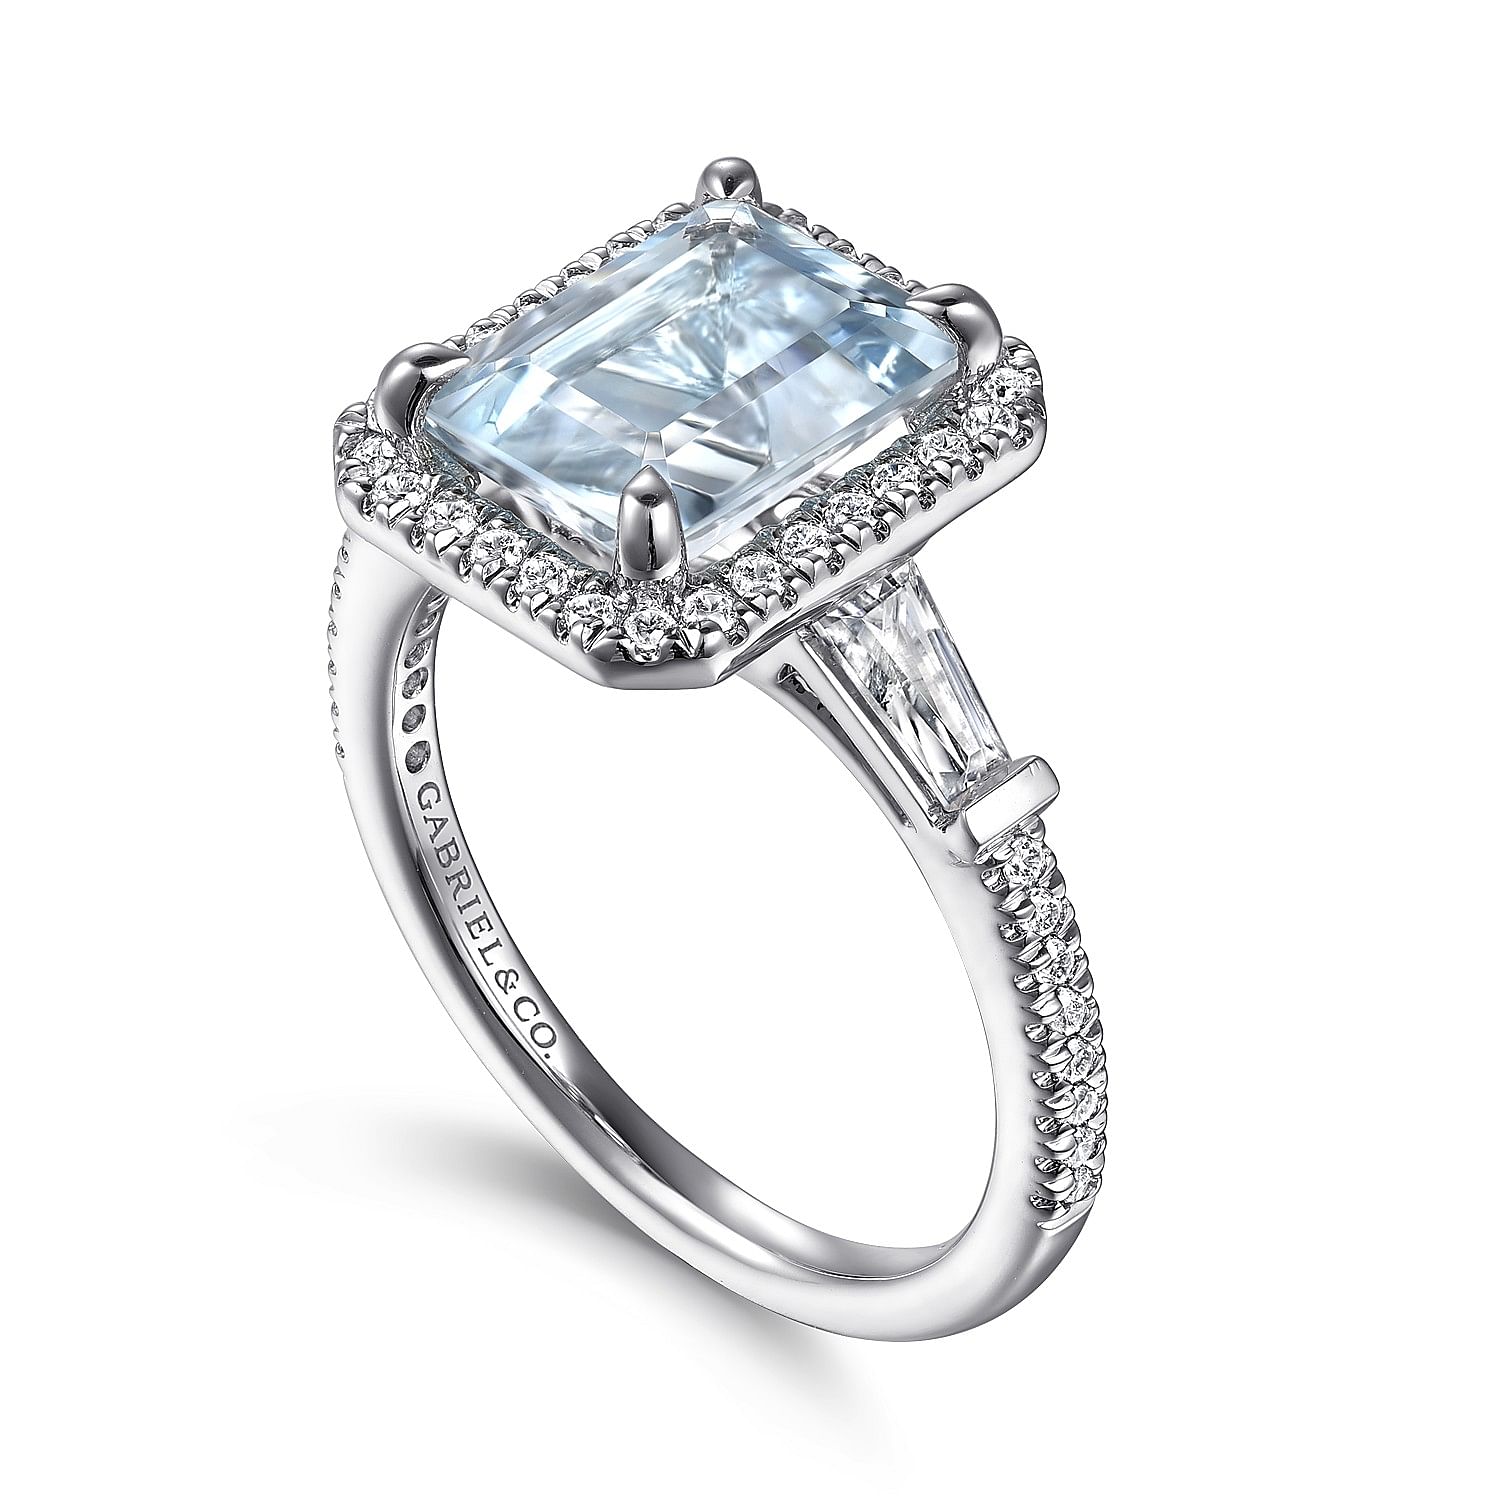 14K White Gold Emerald Three Stone Halo Aquamarine and Diamond Channel Set Engagement Ring